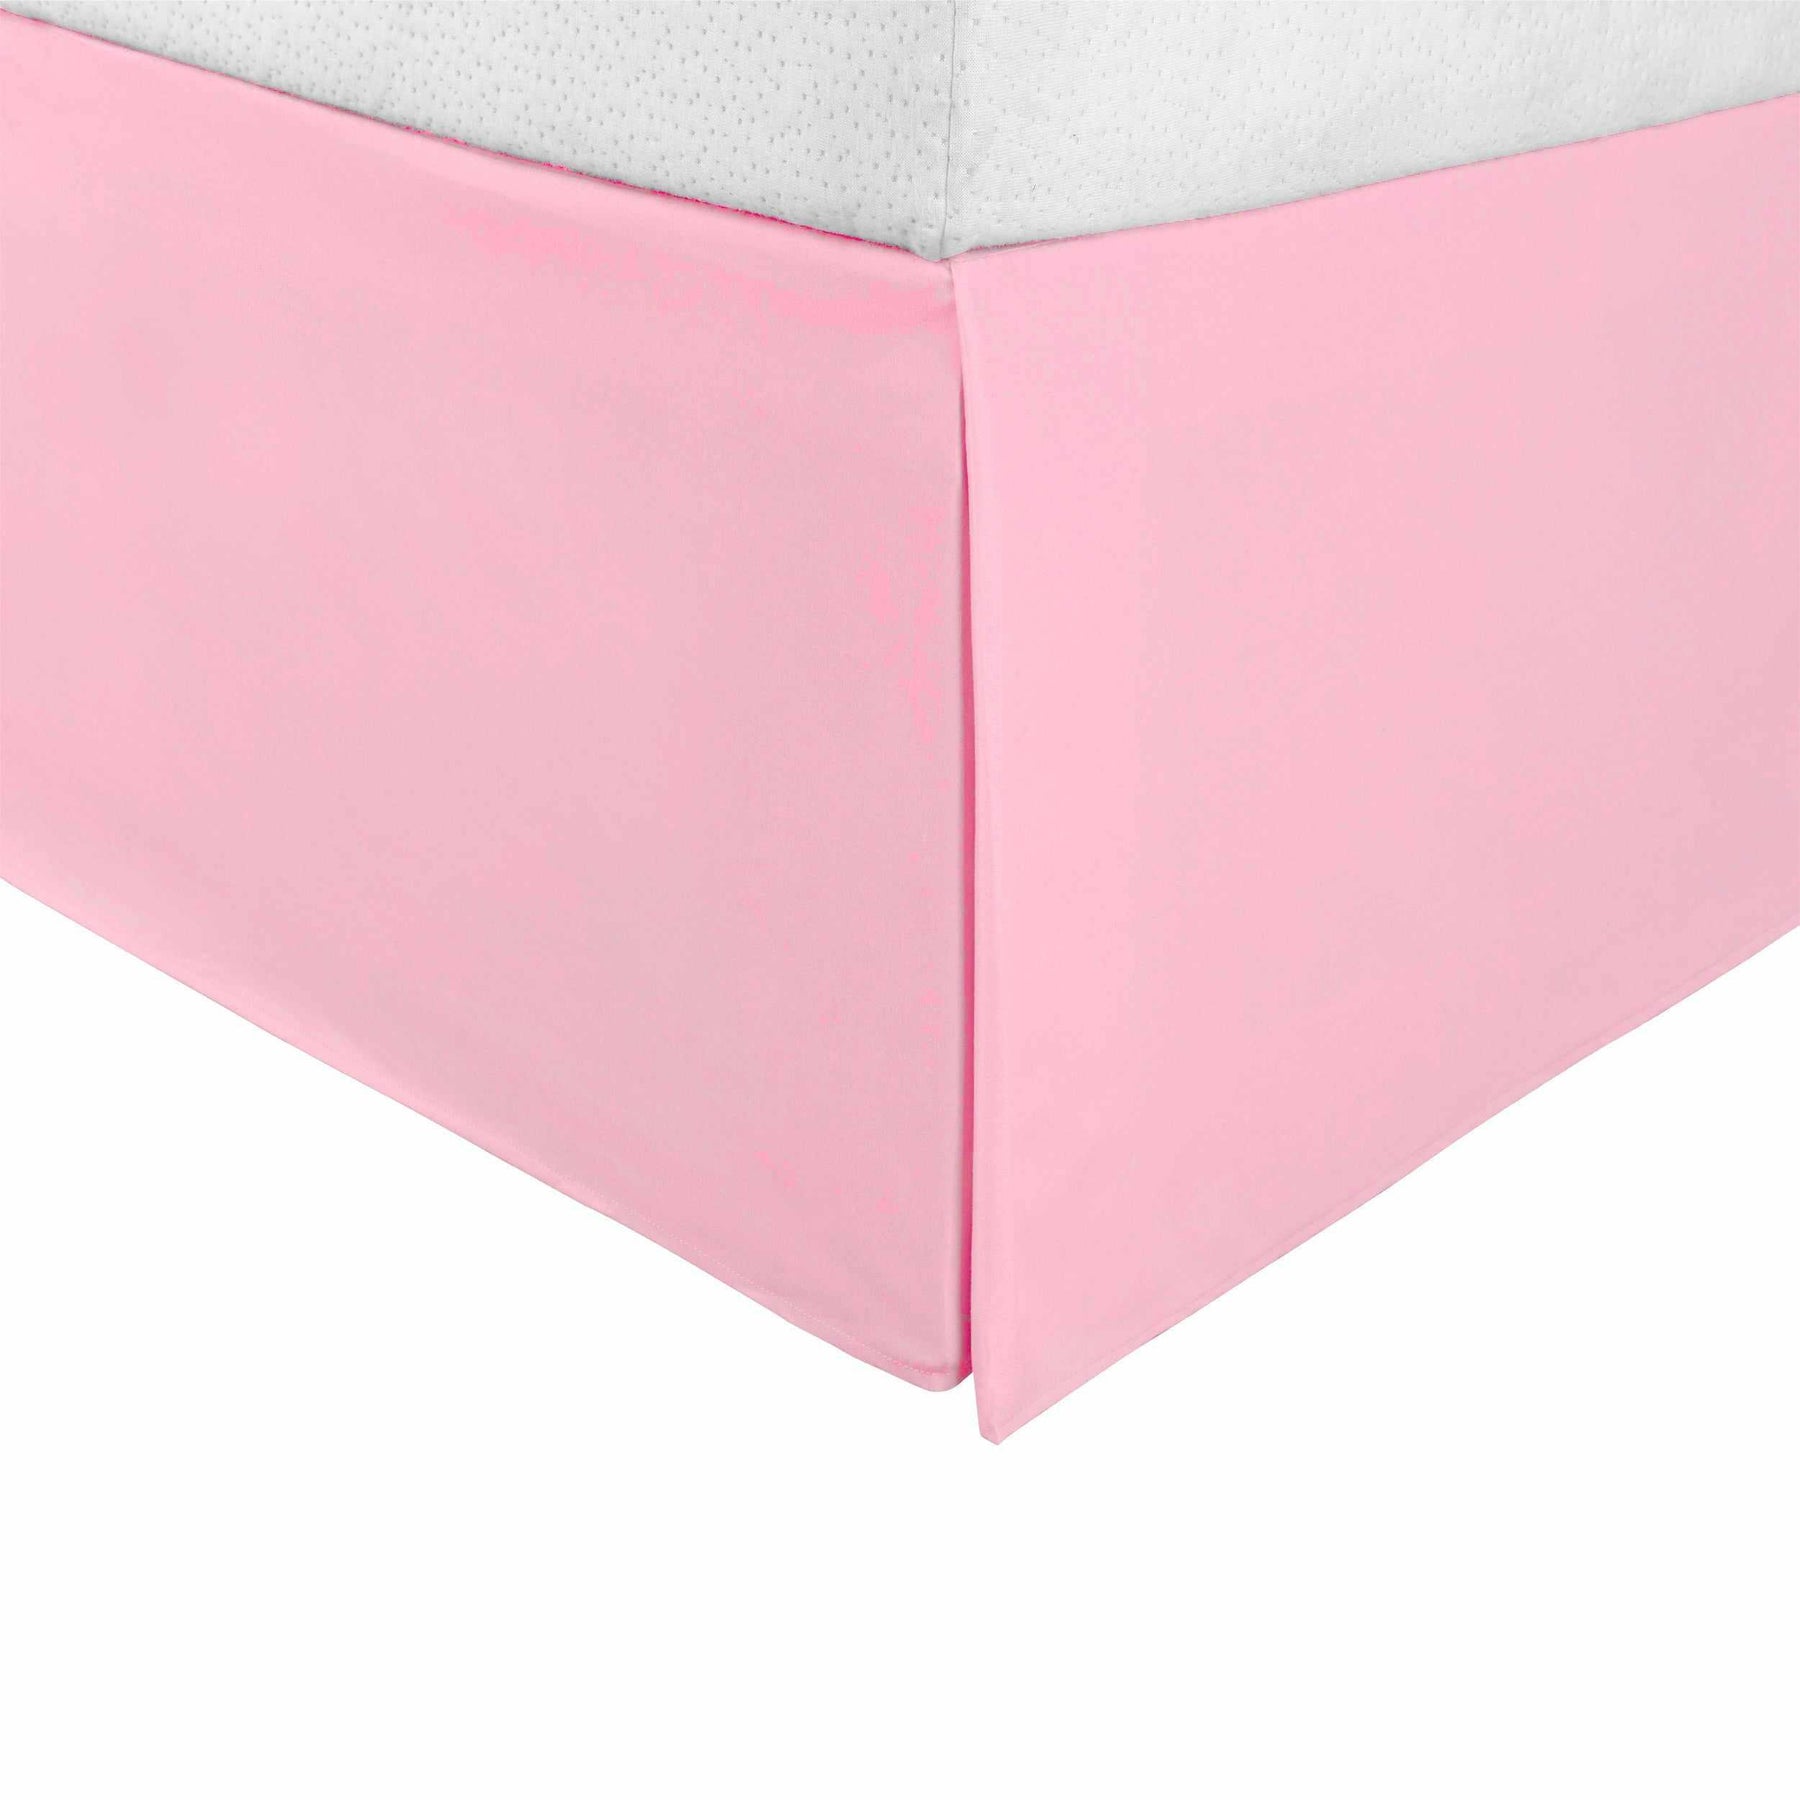  Solid Microfiber Wrinkle Resistant 15 Inch Drop Bed Skirt - Pink